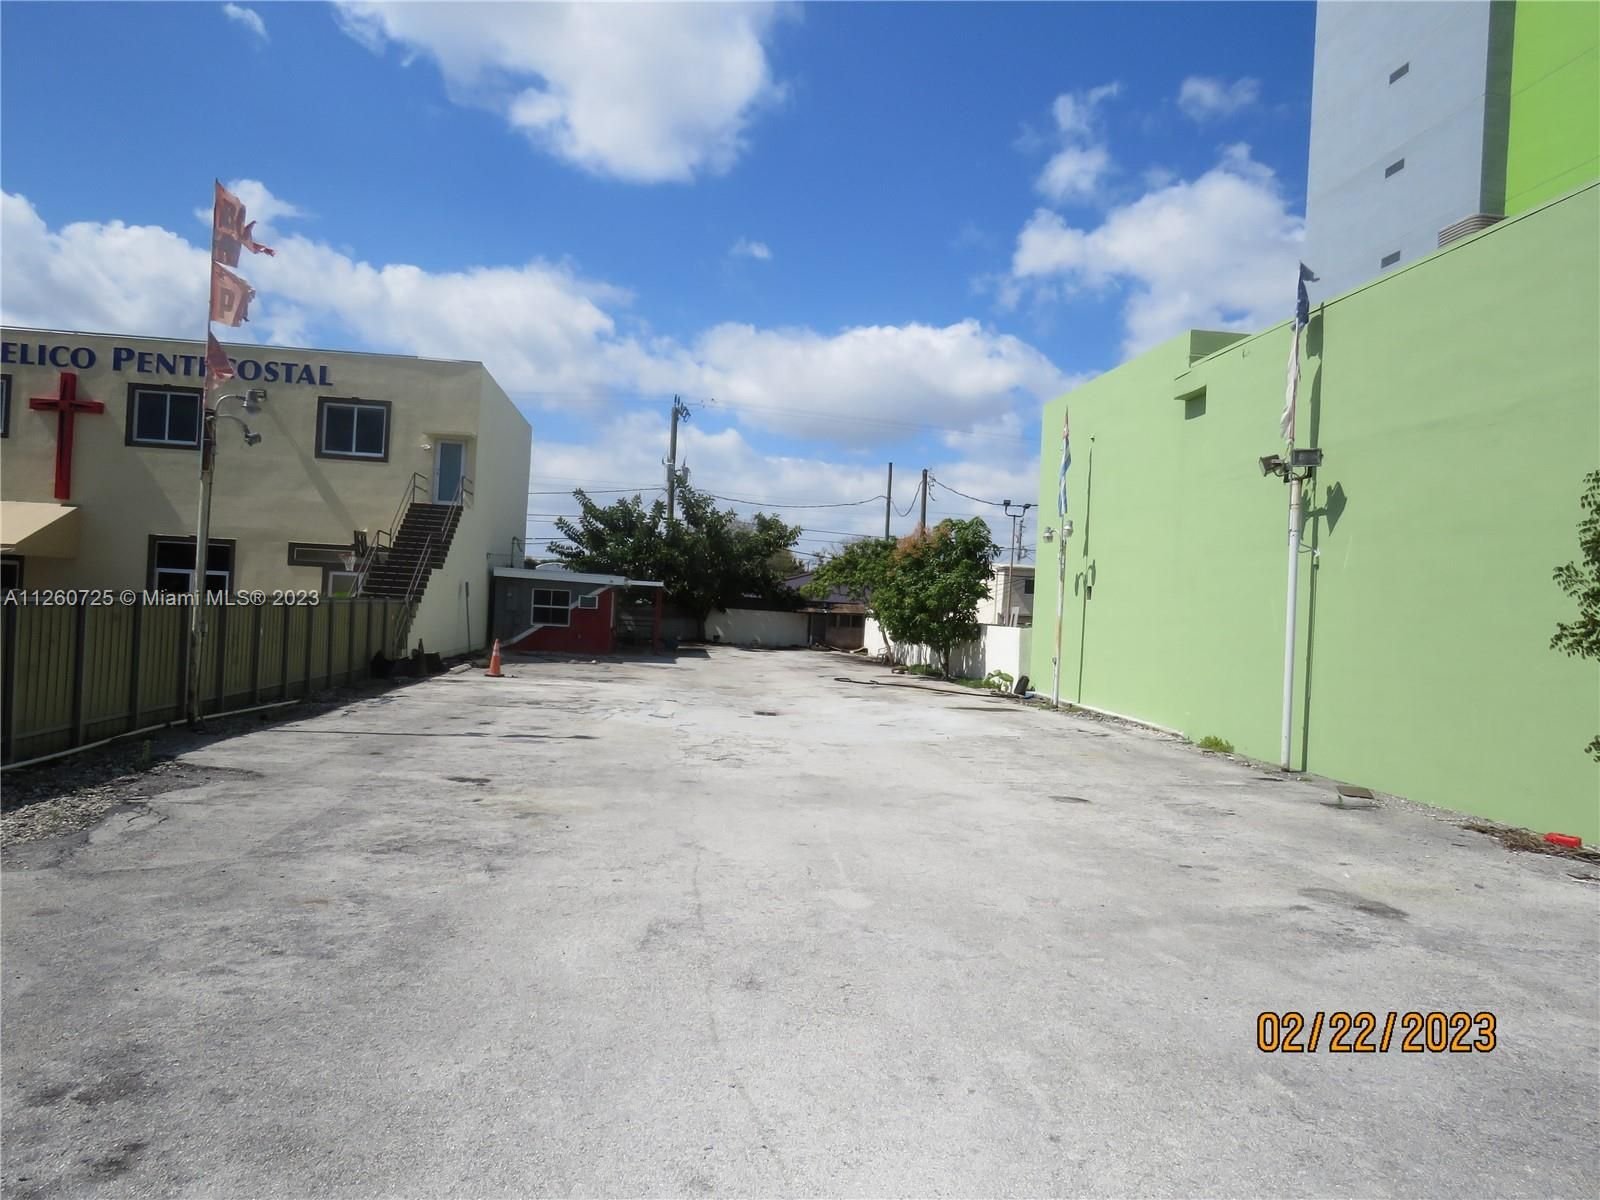 Real estate property located at 102 27th Ave, Miami-Dade County, Miami, FL